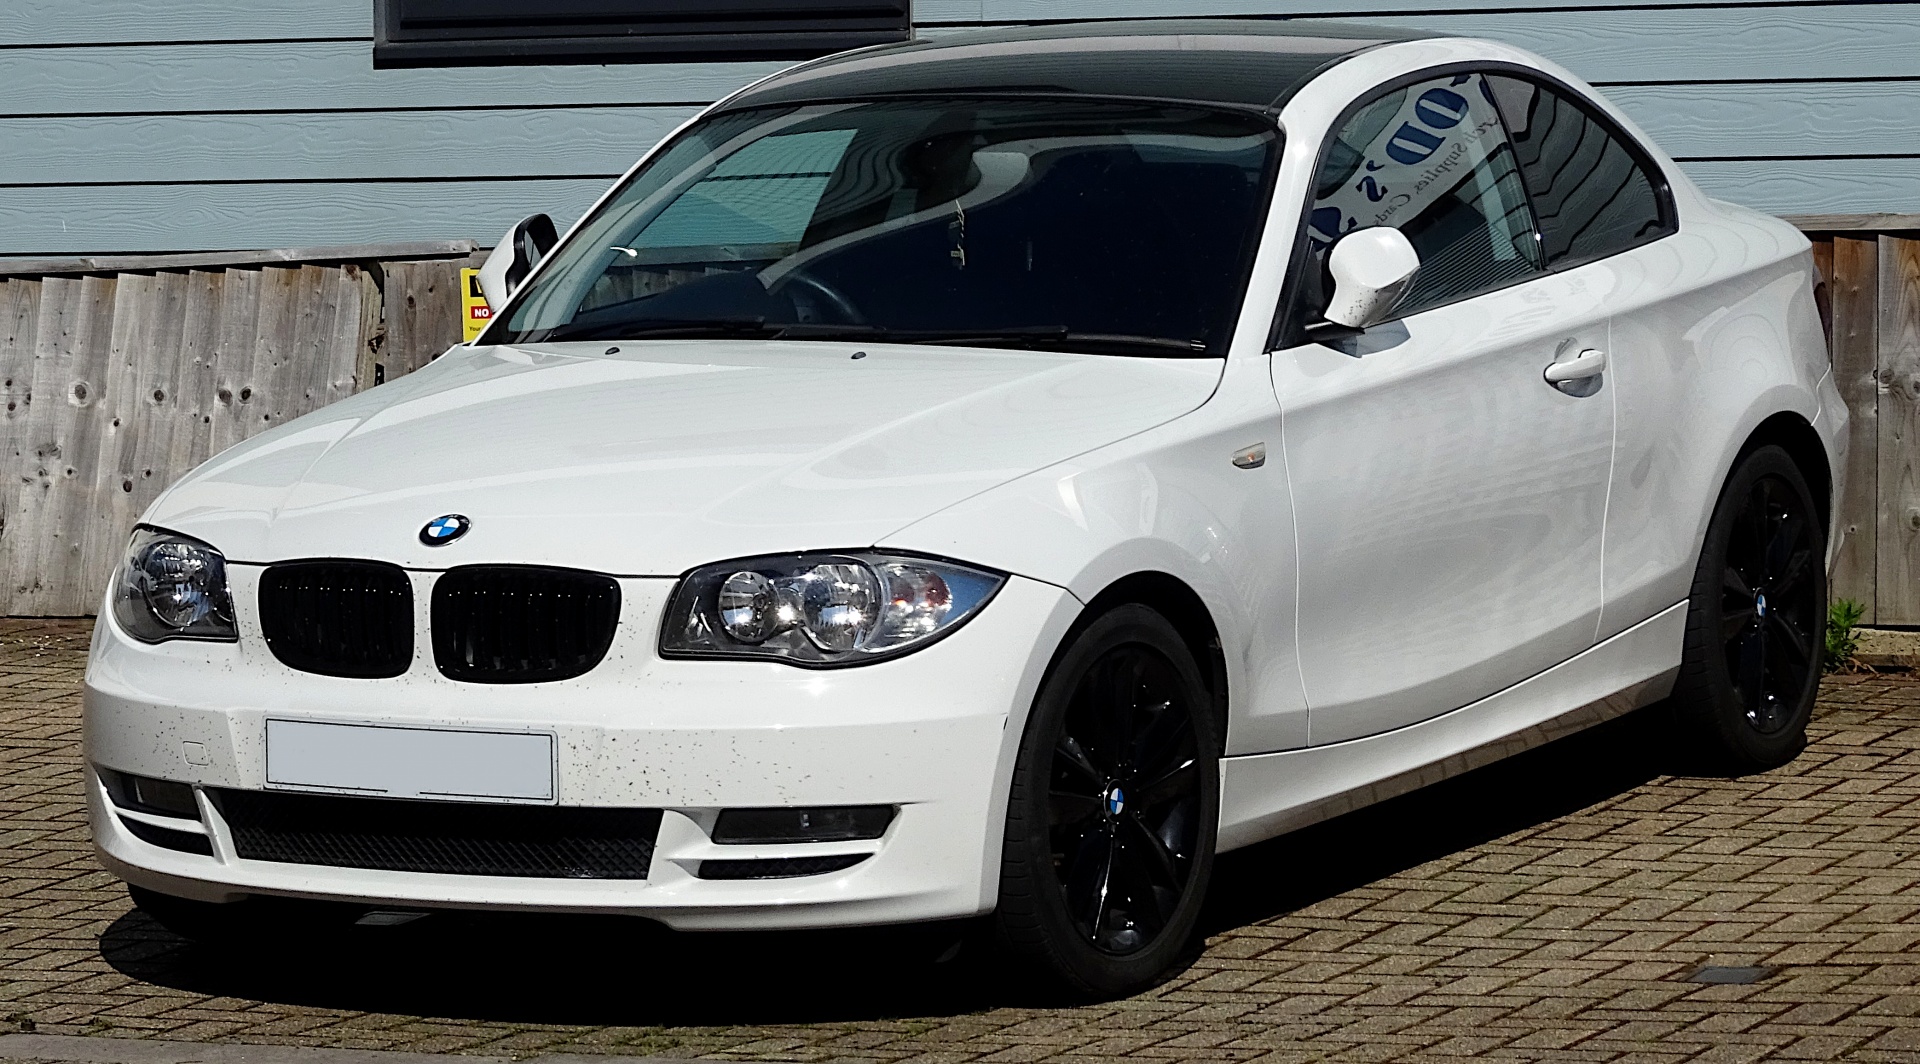 White BMW Coupe Car 020520